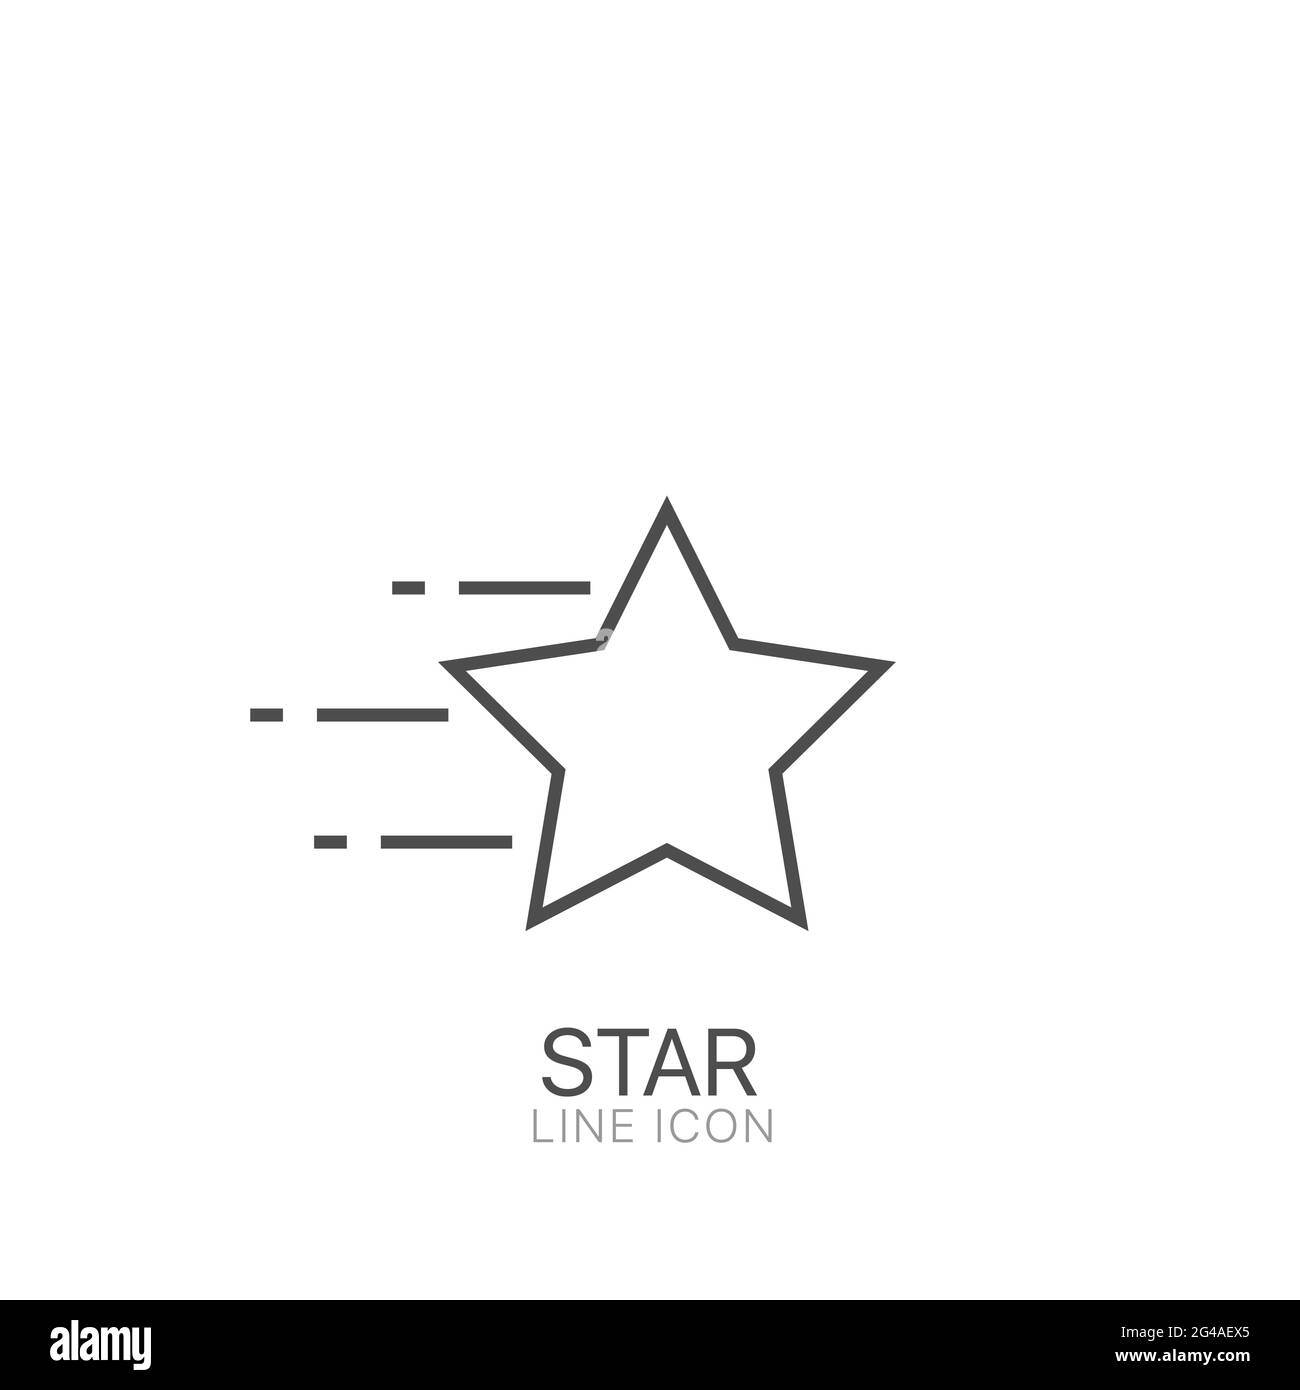 Flying star outline vector icon. Editable stroke Premium star icon or logo Stock Vector